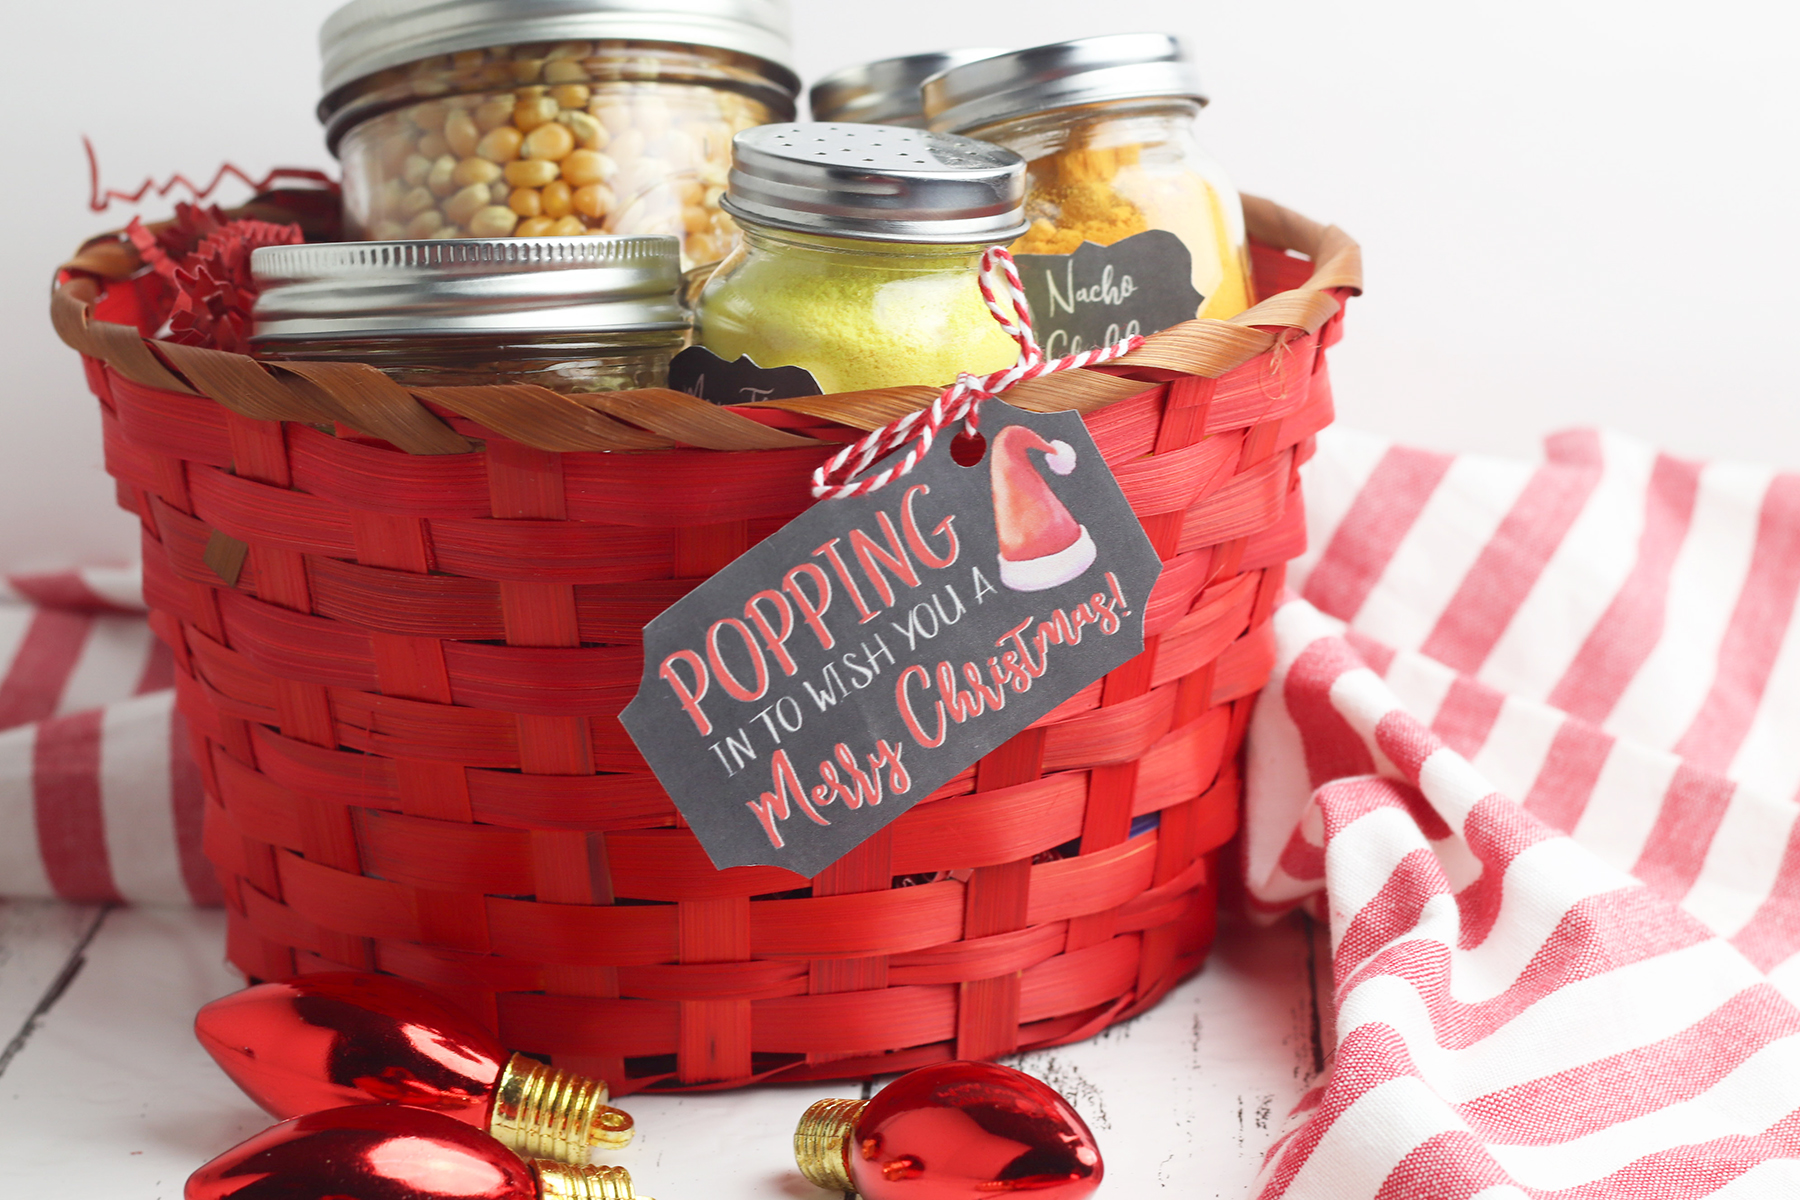 Popcorn Christmas Gift Basket